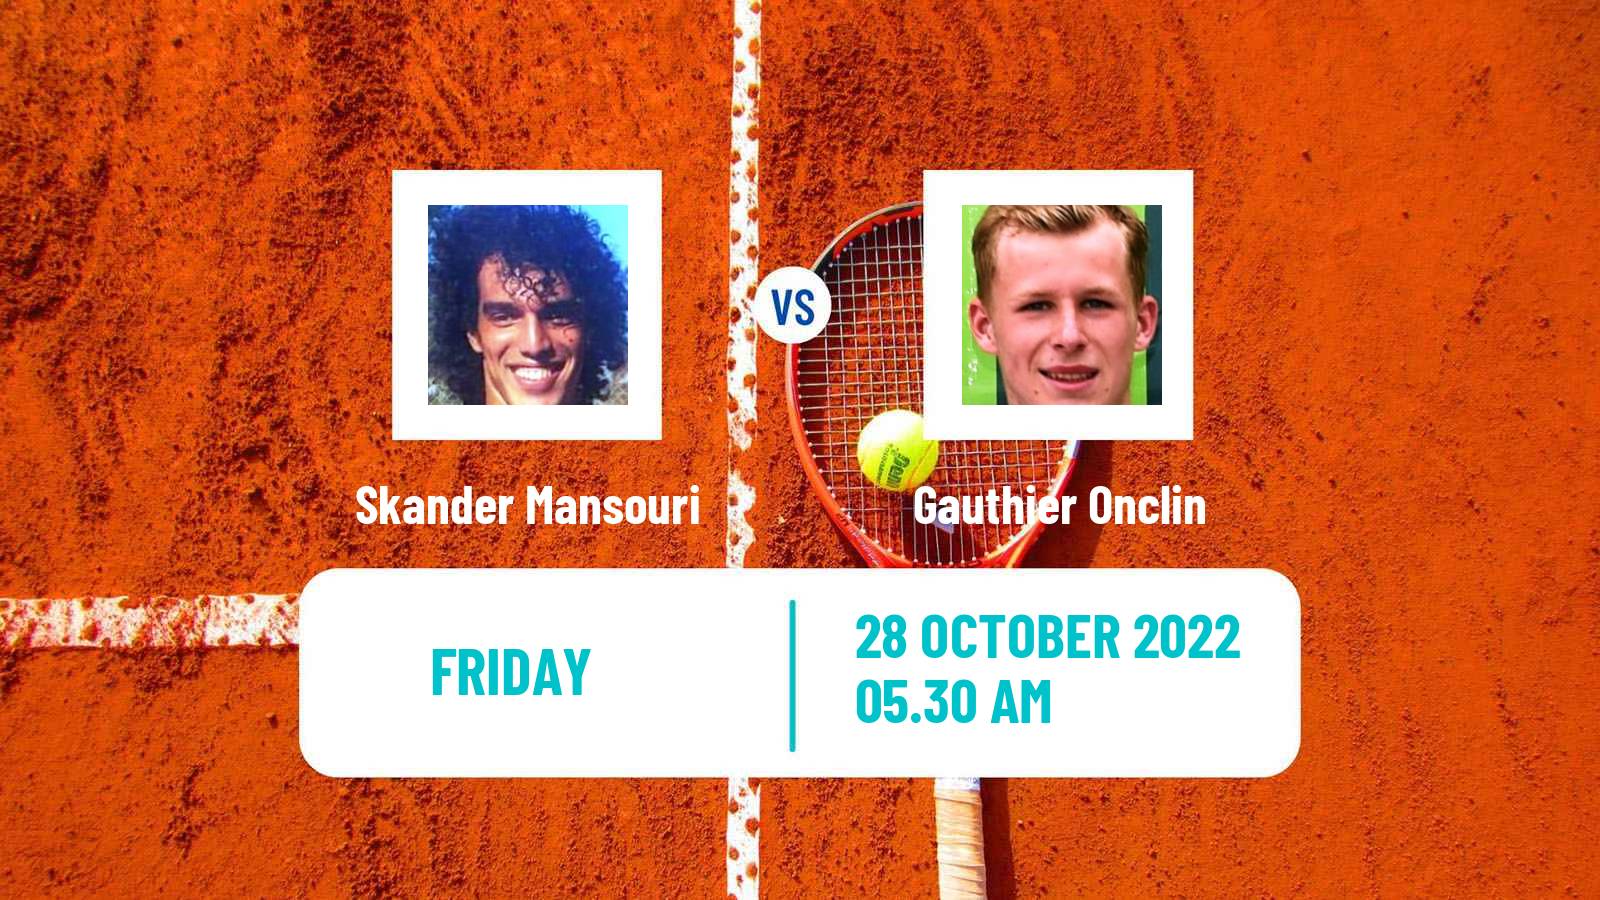 Tennis ITF Tournaments Skander Mansouri - Gauthier Onclin